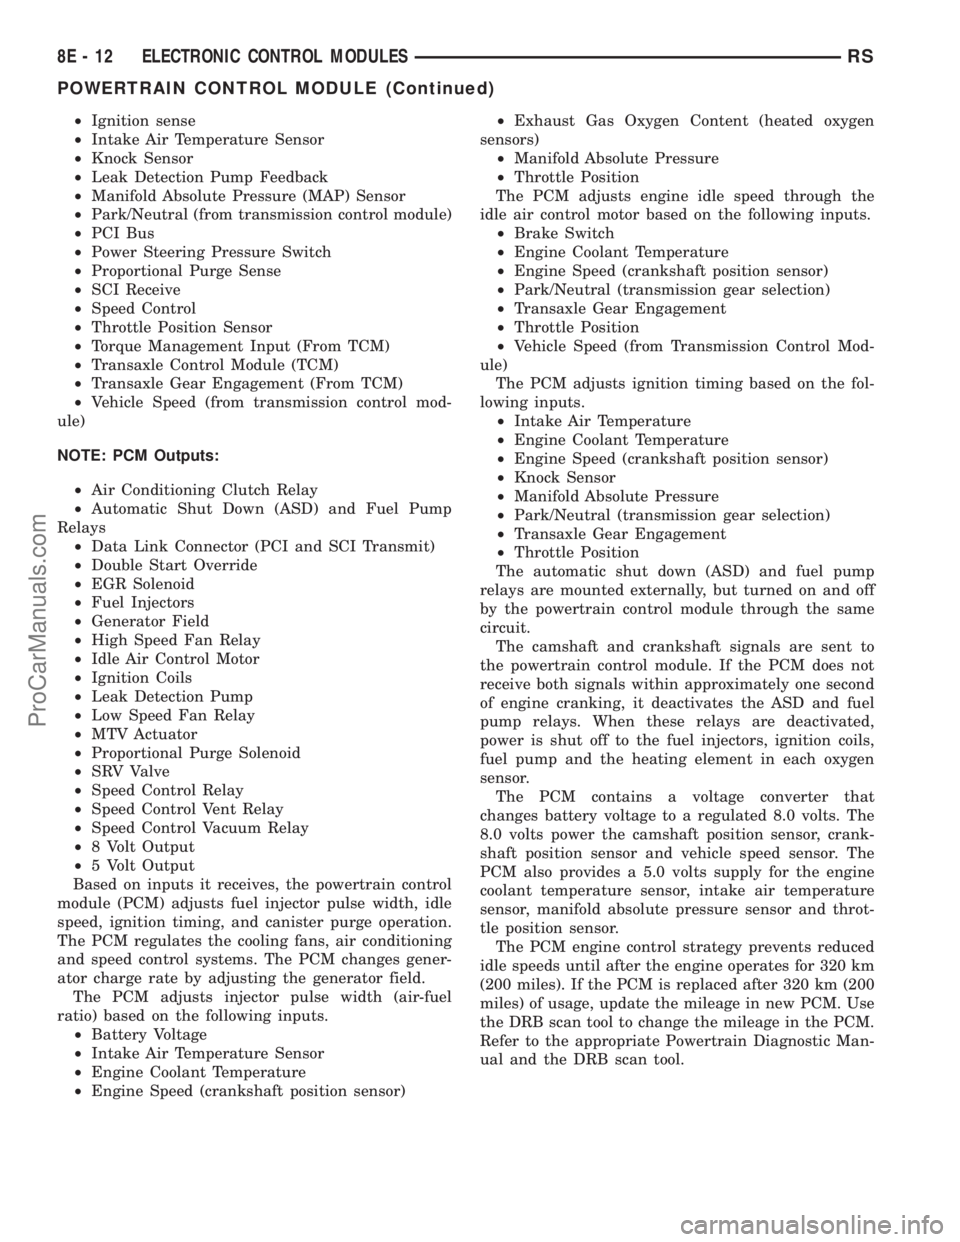 CHRYSLER TOWN AND COUNTRY 2002  Service Manual ²Ignition sense
²Intake Air Temperature Sensor
²Knock Sensor
²Leak Detection Pump Feedback
²Manifold Absolute Pressure (MAP) Sensor
²Park/Neutral (from transmission control module)
²PCI Bus
²P